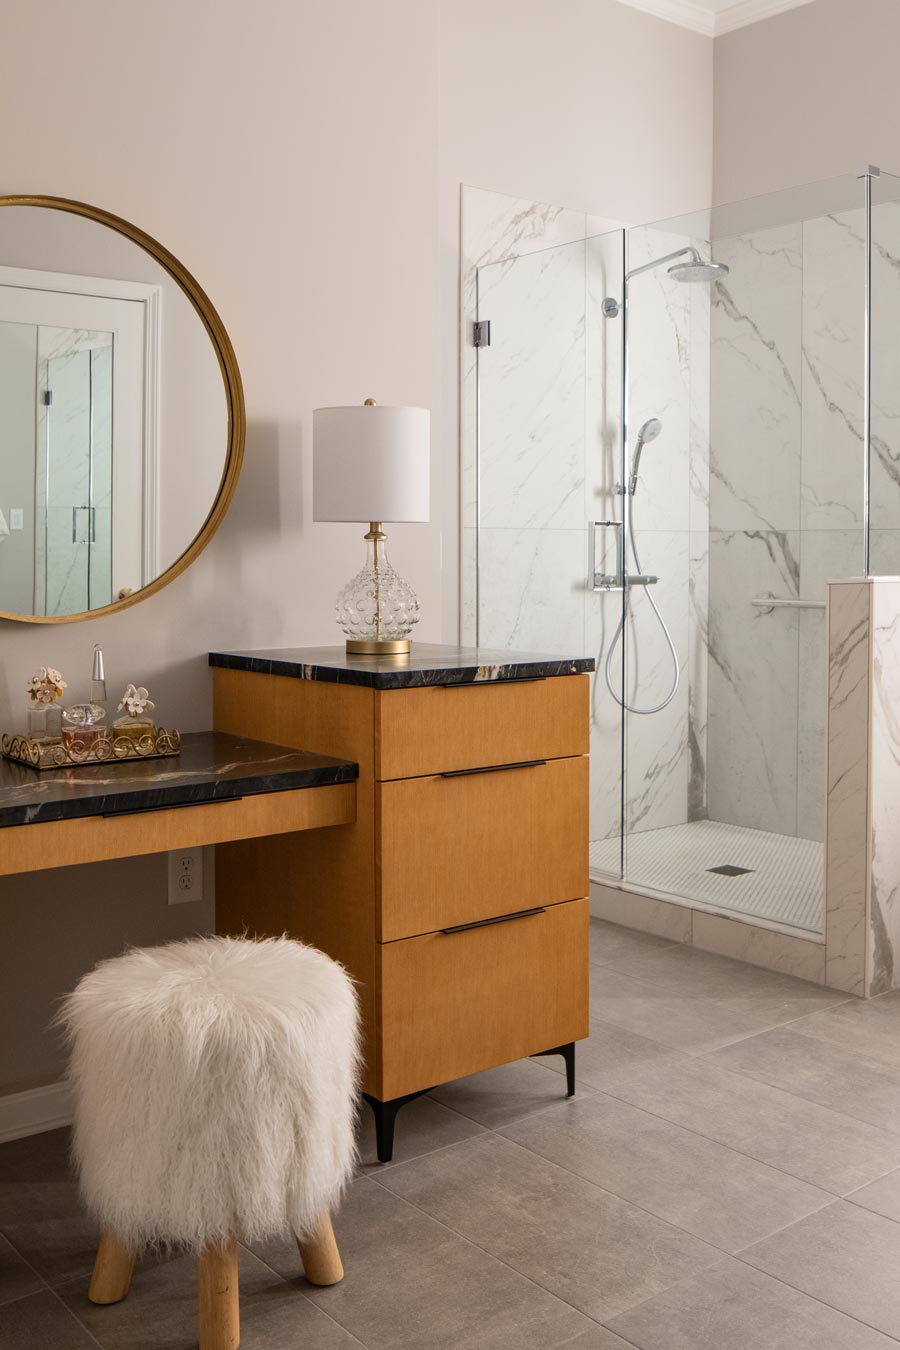 Bathroom vanity and marble floor and shower